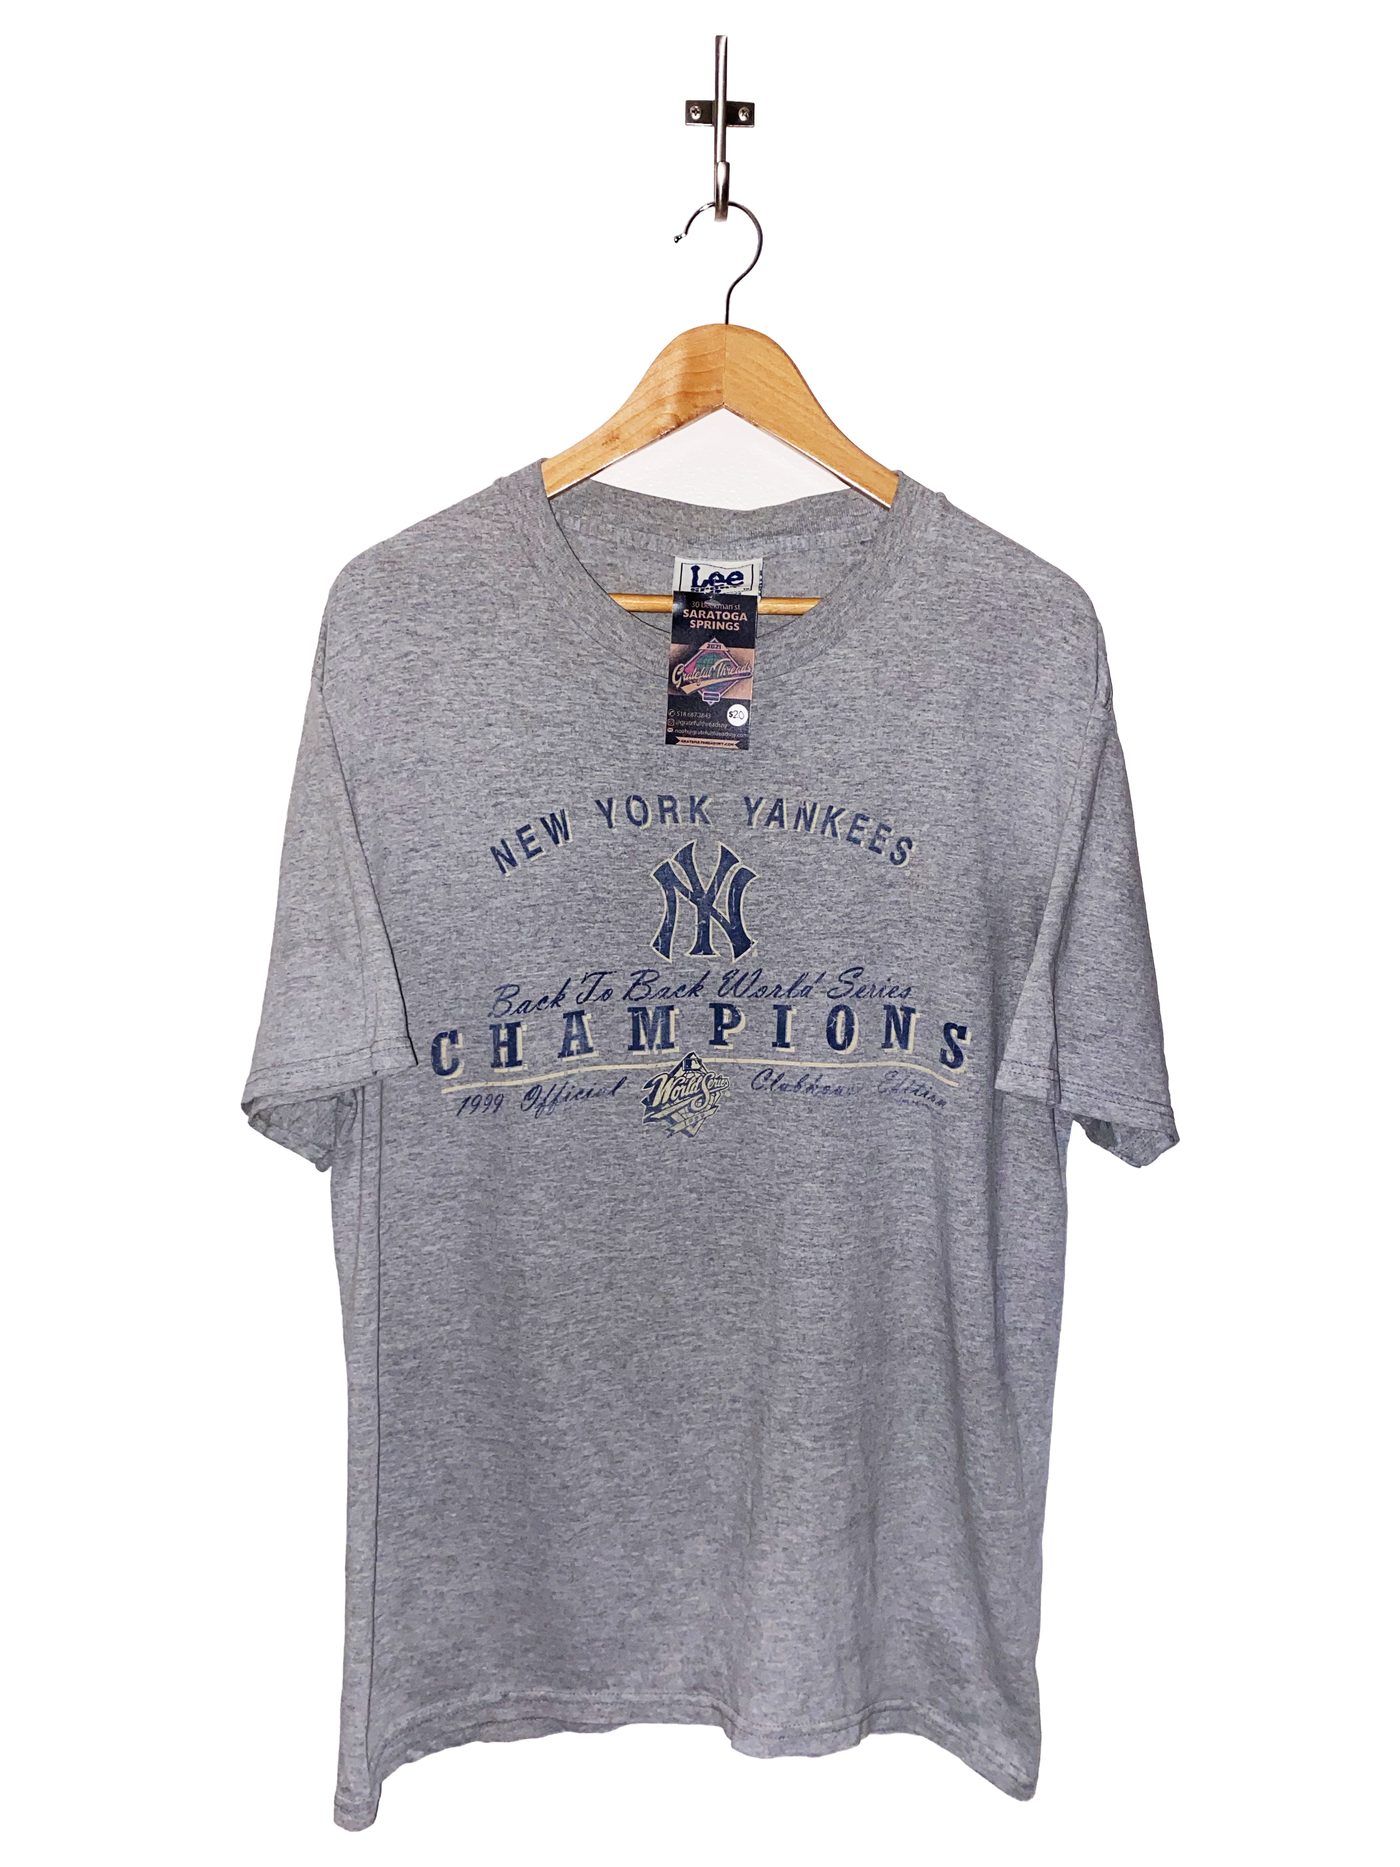 Vintage 1999 New York Yankees Champions T-Shirt